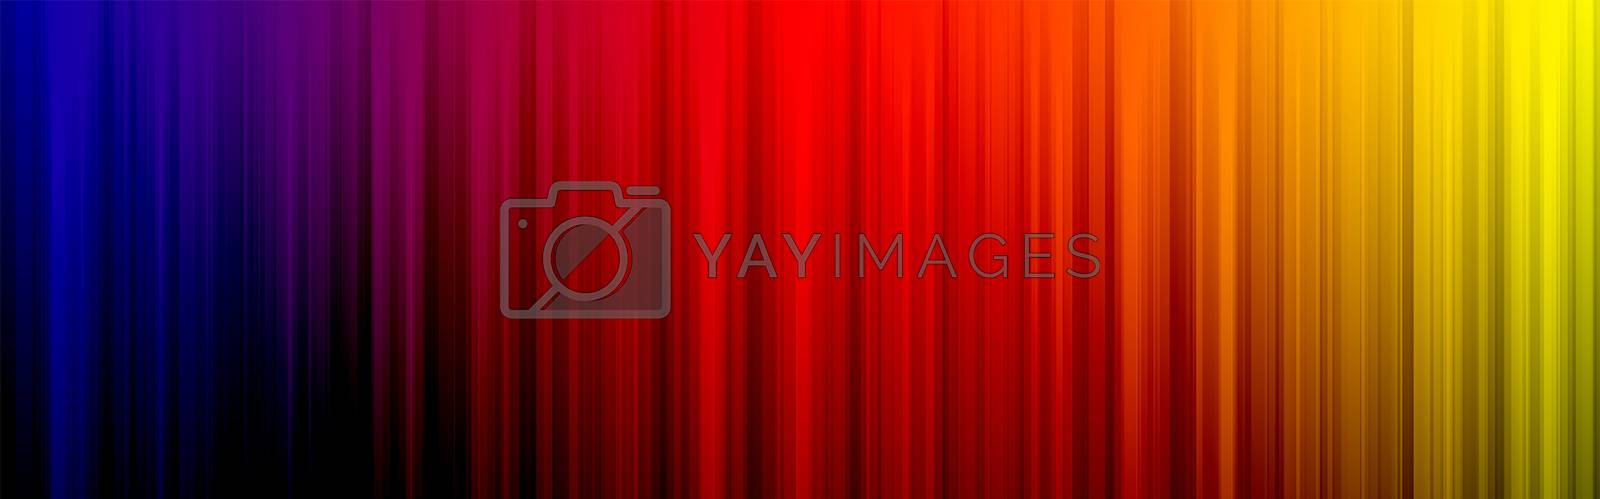 Royalty free image of Rainbow colors abstract background. by Eugene_Yemelyanov